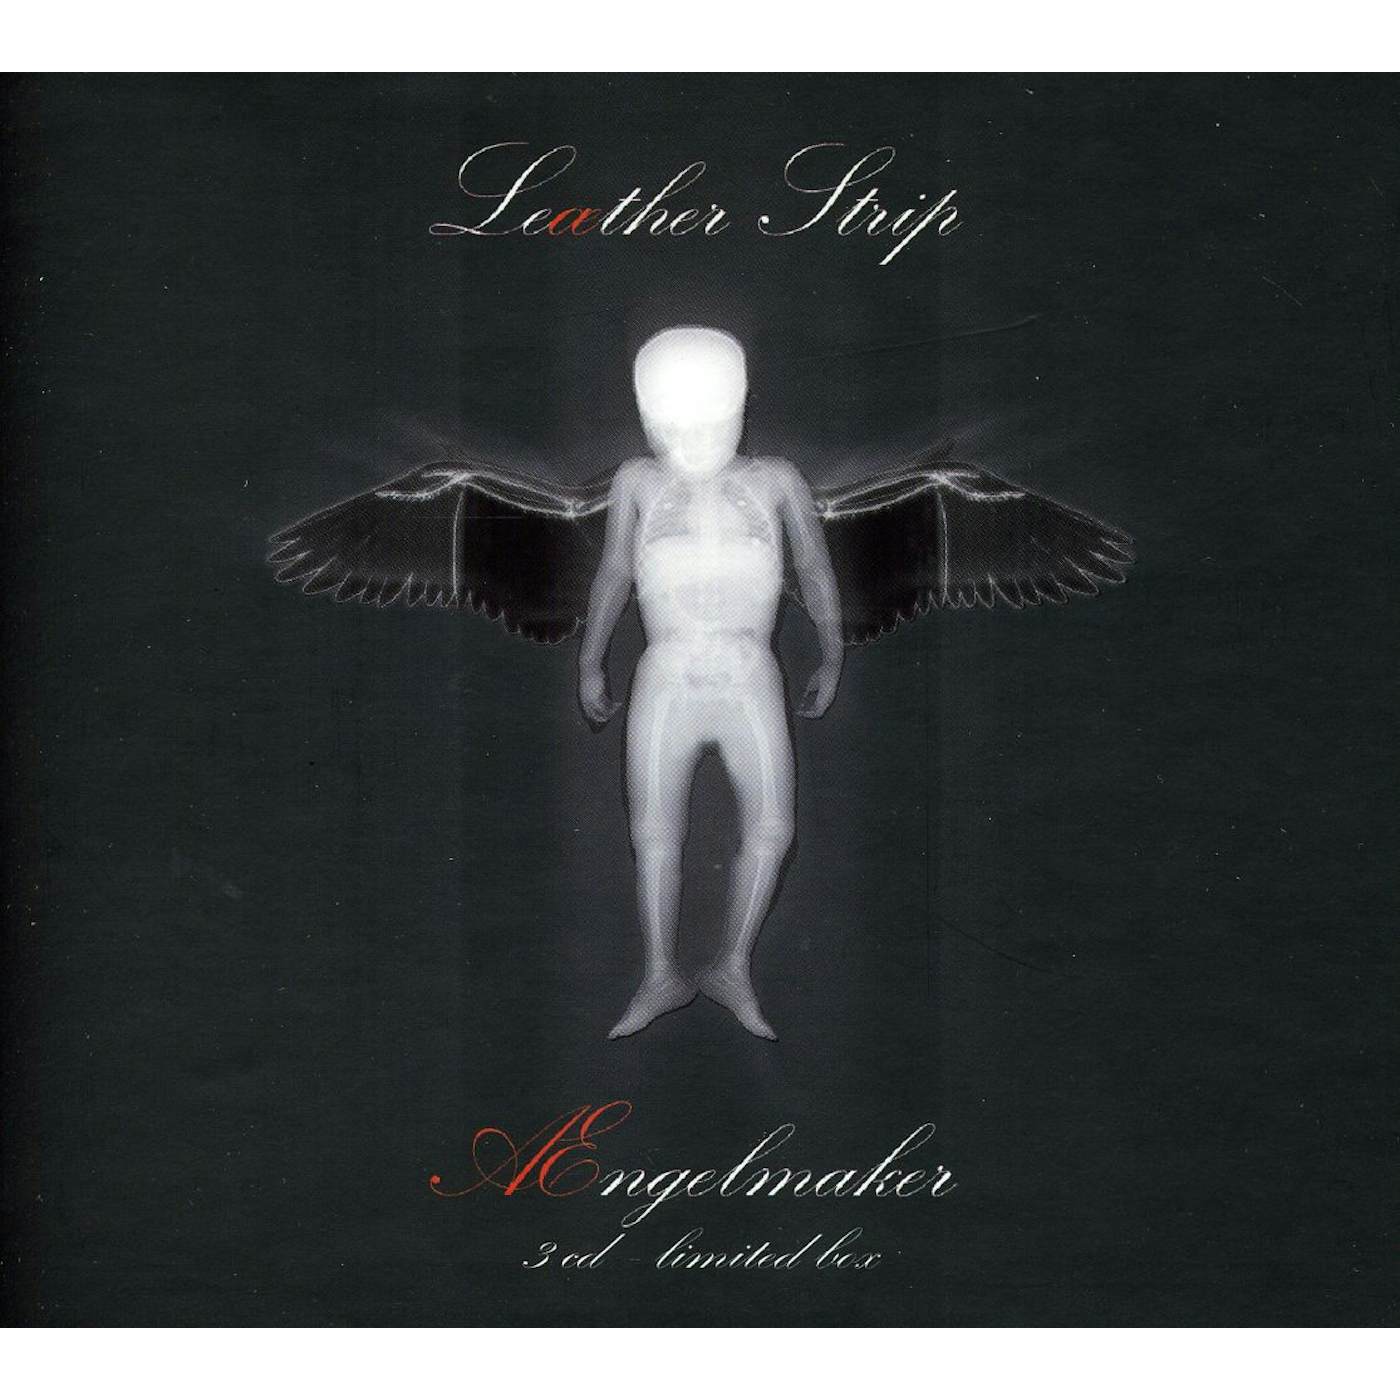 Leaether Strip AENGELMAKER & YES I'M LIMITED IV CD